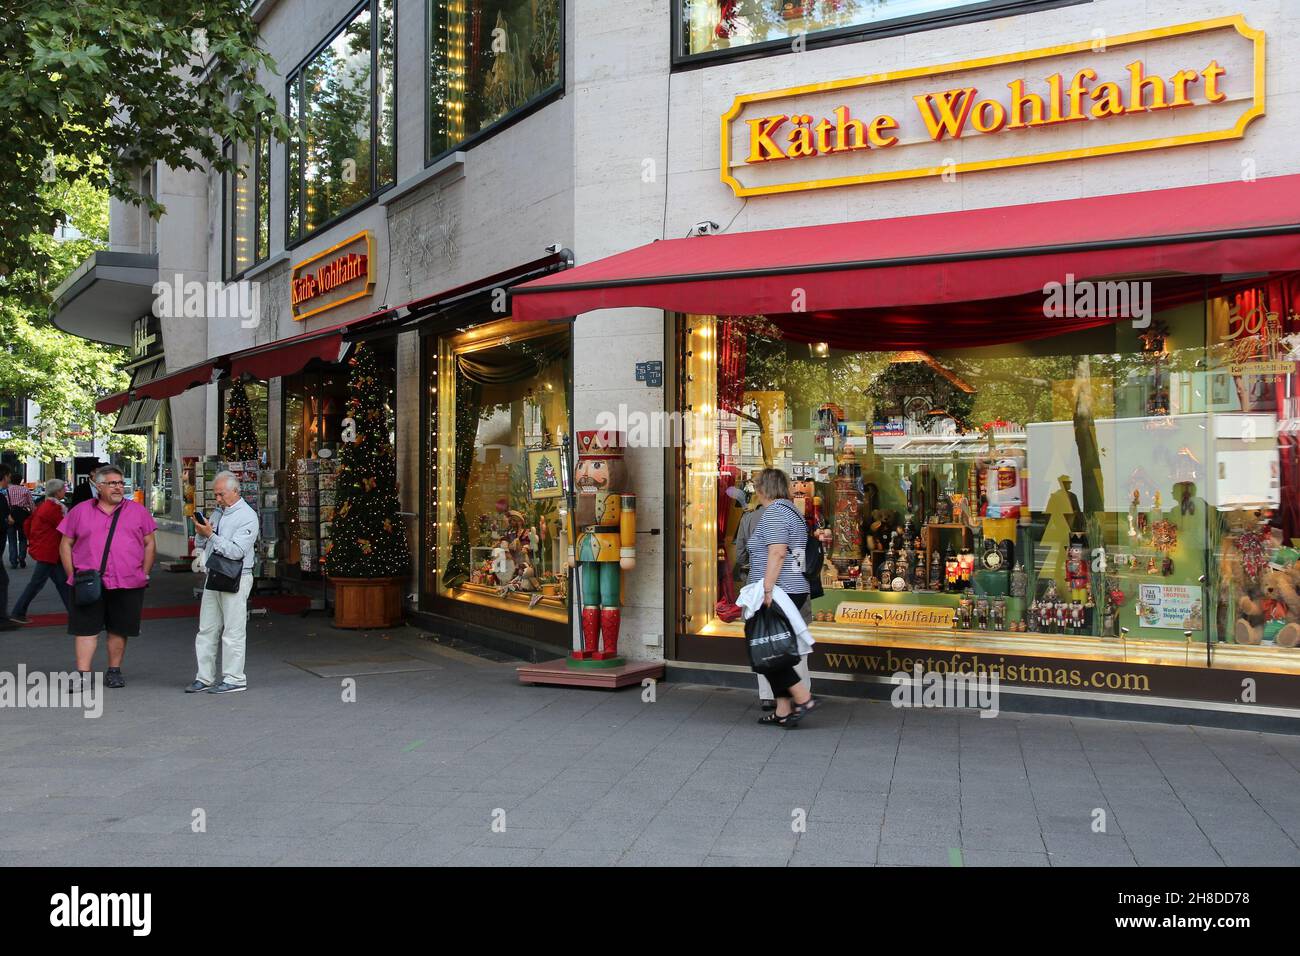 BERLINO, GERMANIA - 27 AGOSTO 2014: La gente visita Kathel Wohlfahrt Specialist Christmas Store presso il famoso Kurfurstendamm (Ku'Damm) Avenue a Berlino. Foto Stock